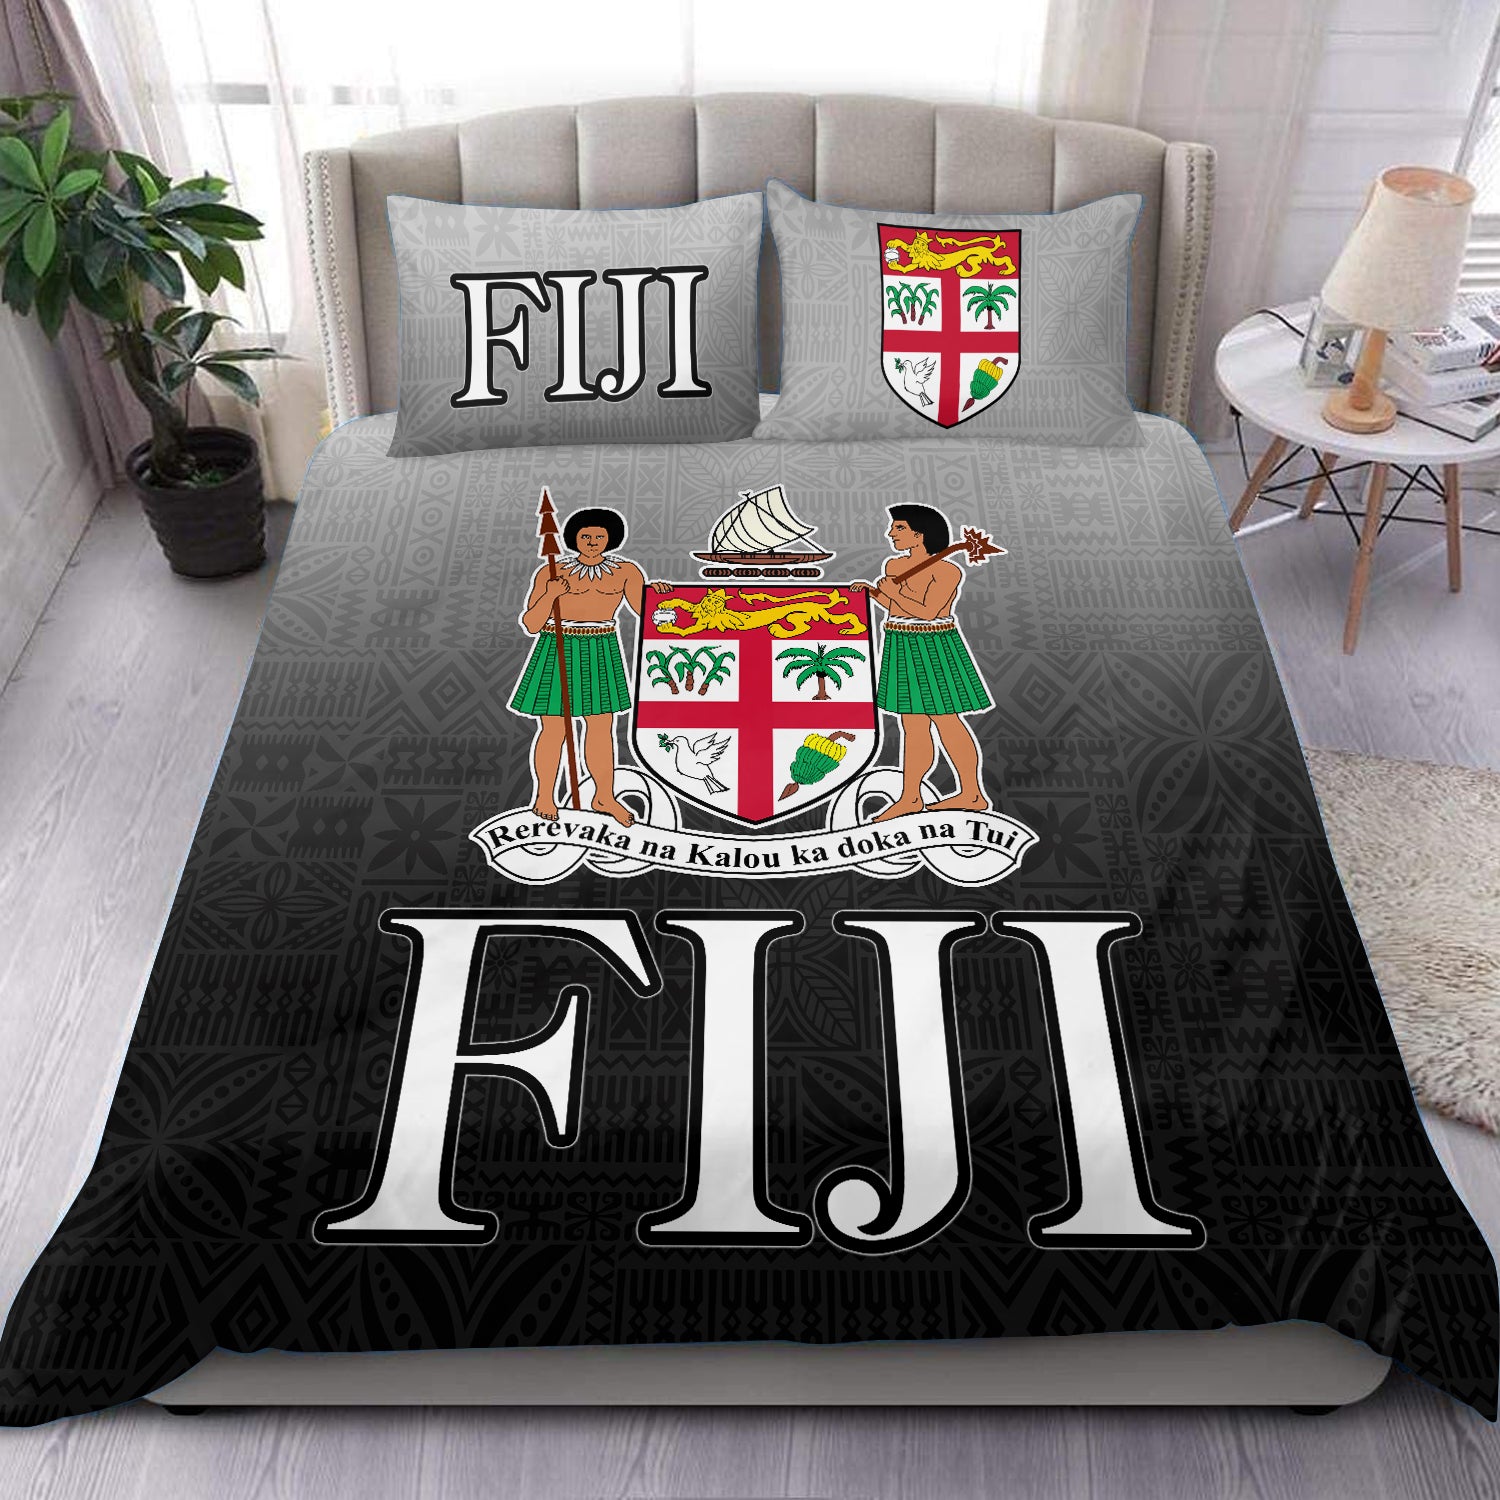 Fiji Bedding Sets - Fijian patterns ver2 Black - LT20 Blue - Polynesian Pride